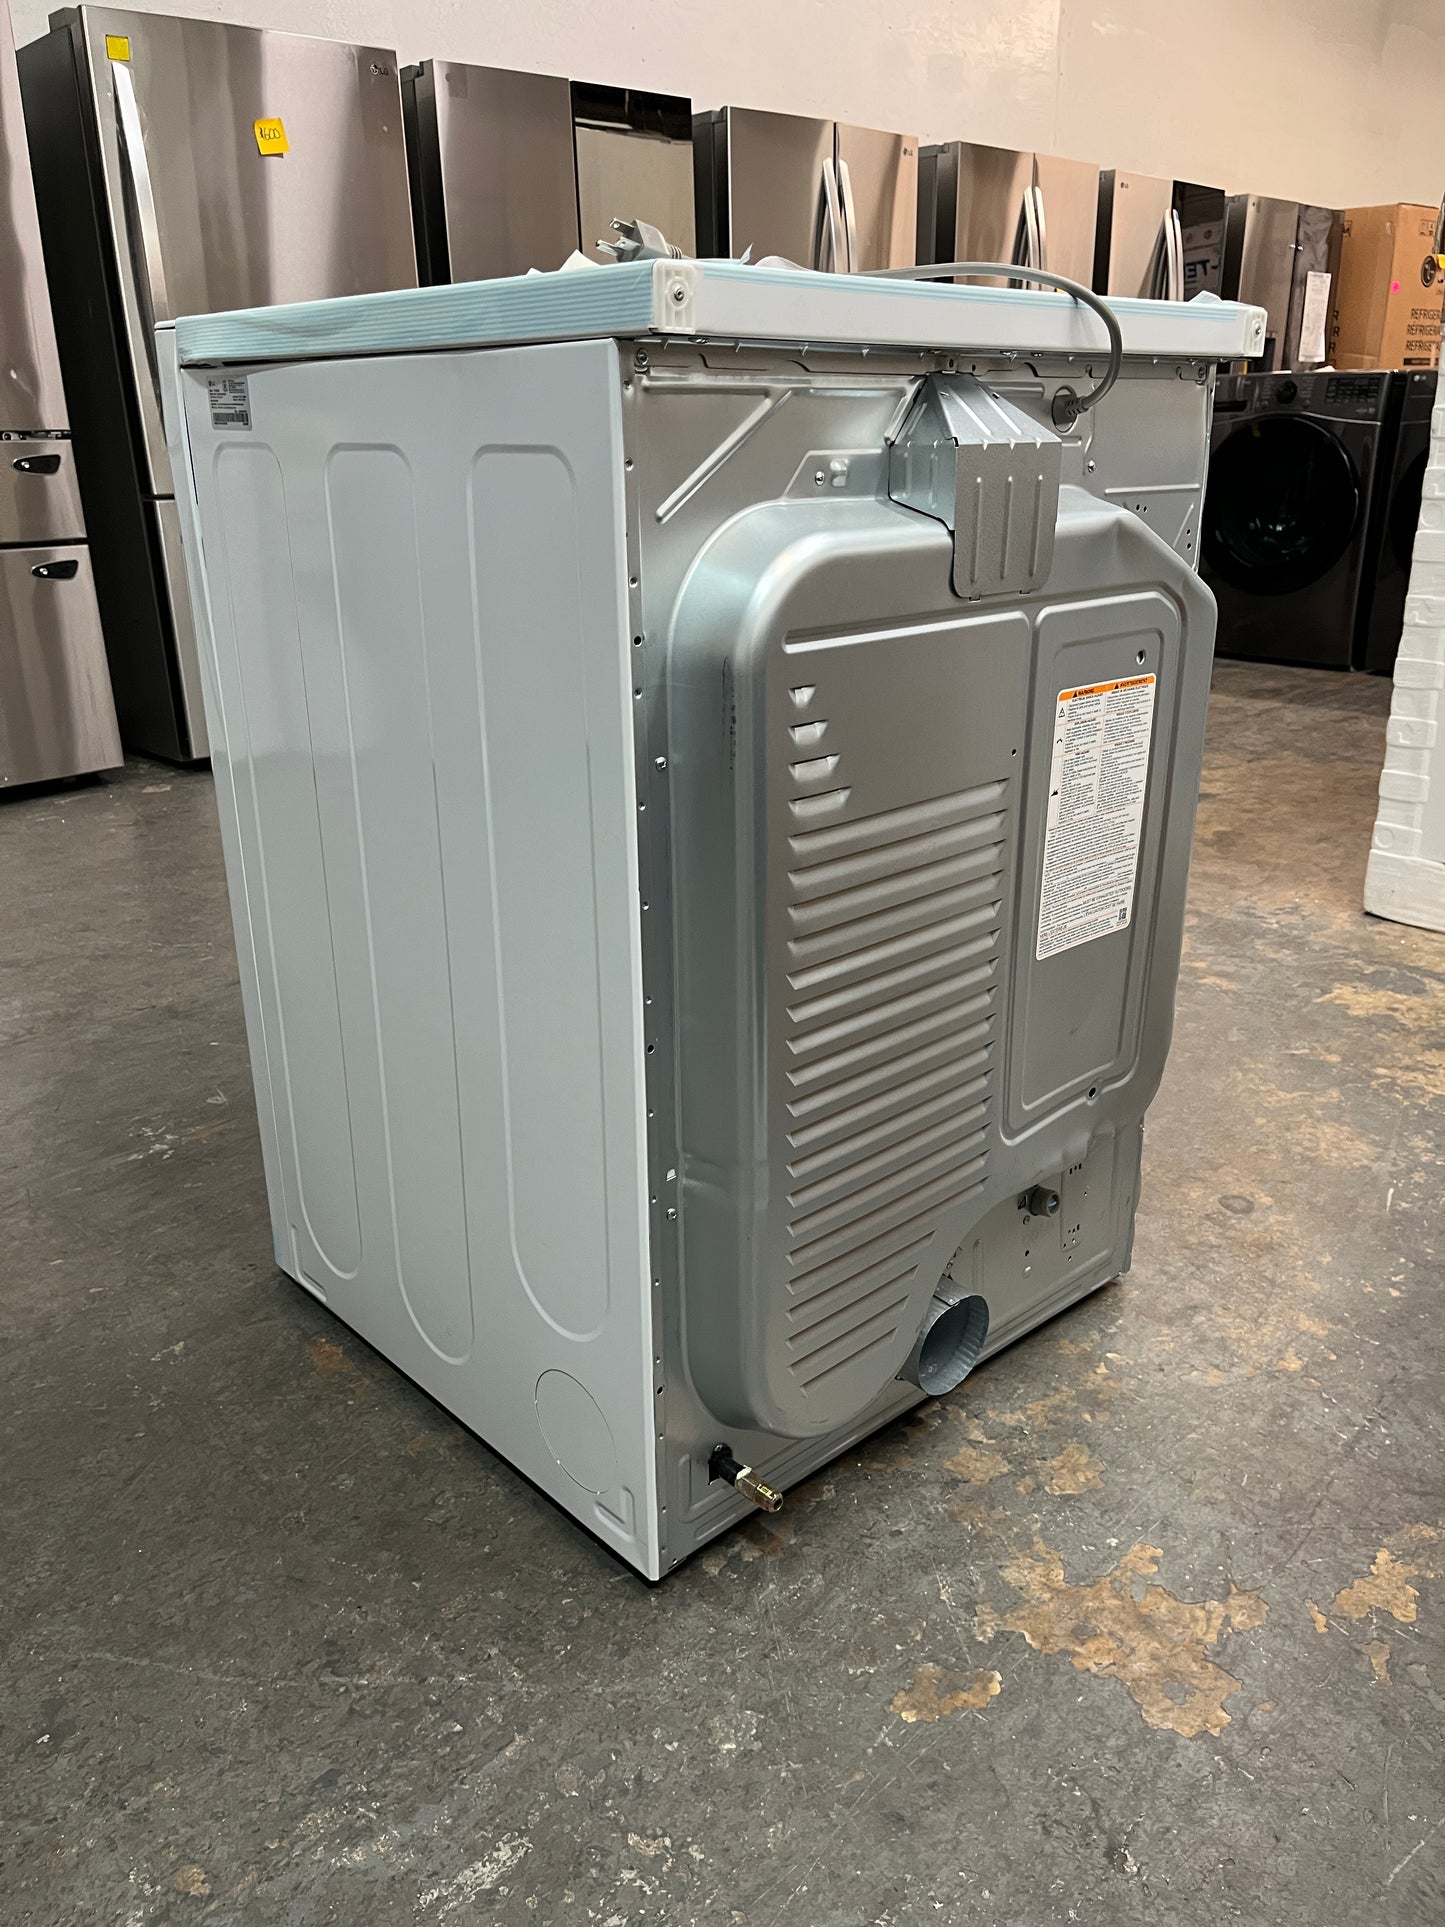 LG 7.4 cu ft Gas Dryer